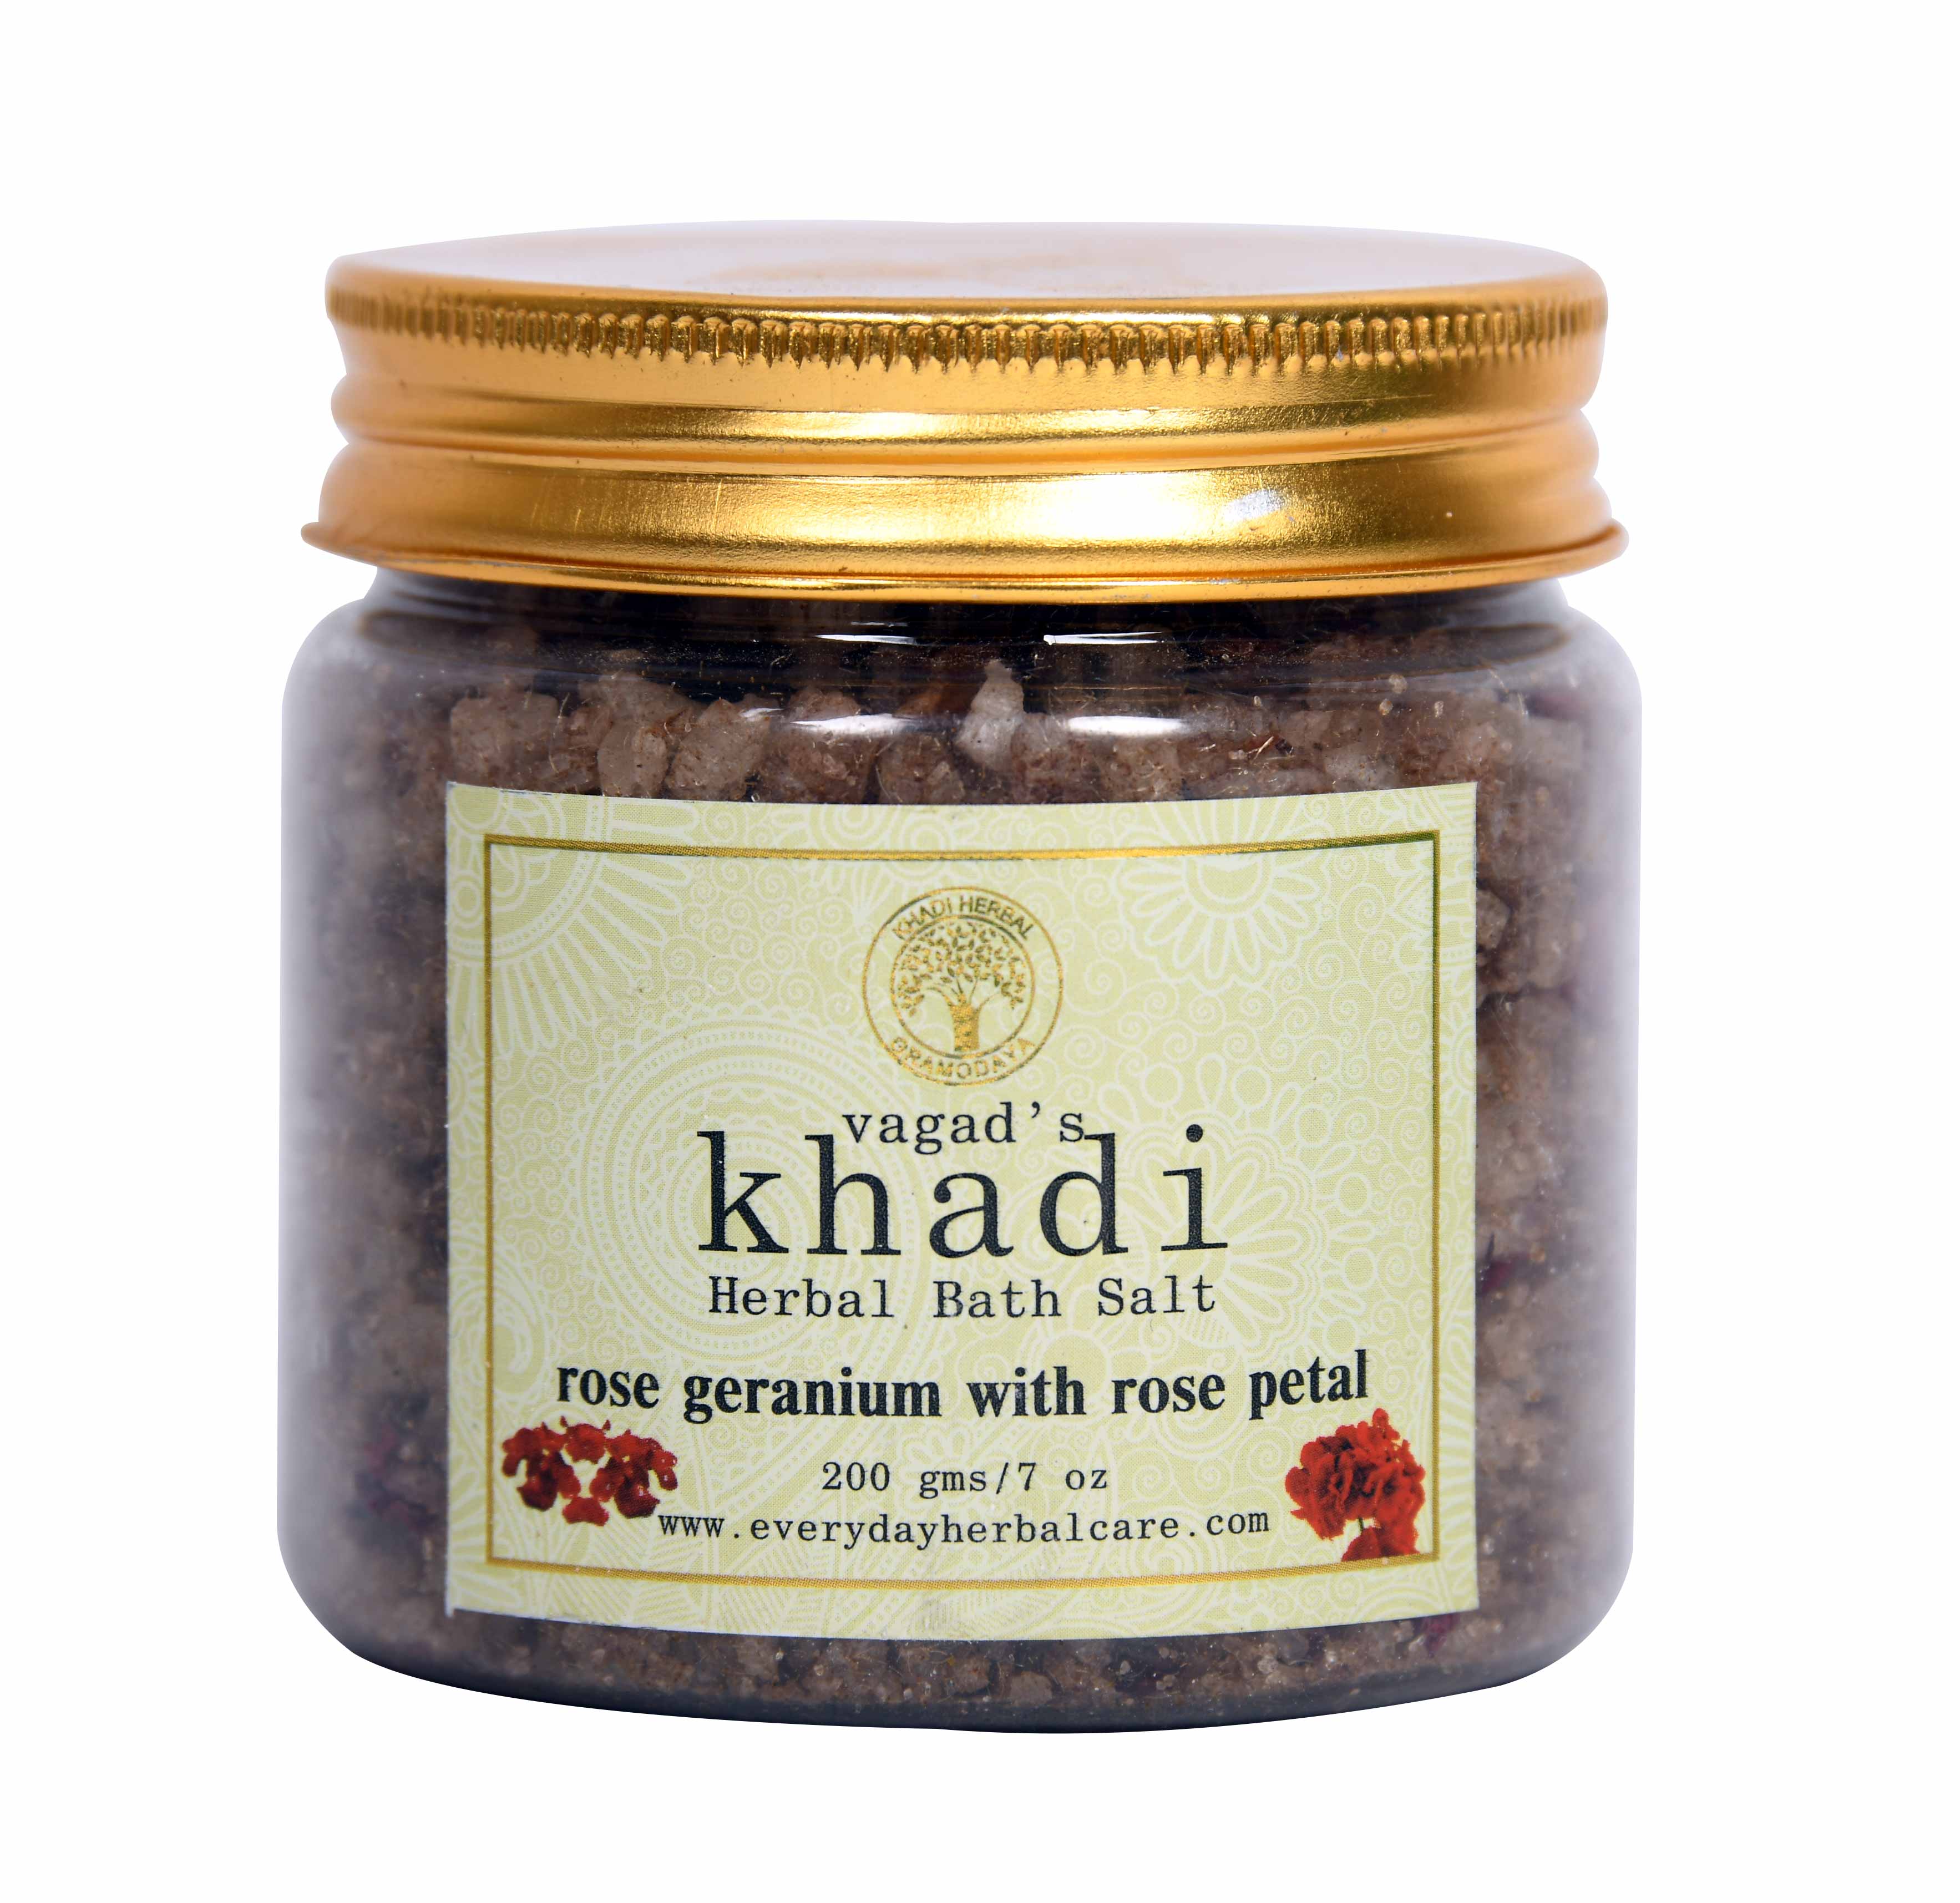 Buy Vagad's Khadi Rose Geranium With Rose Petals Herbal Bath Salt at Best Price Online